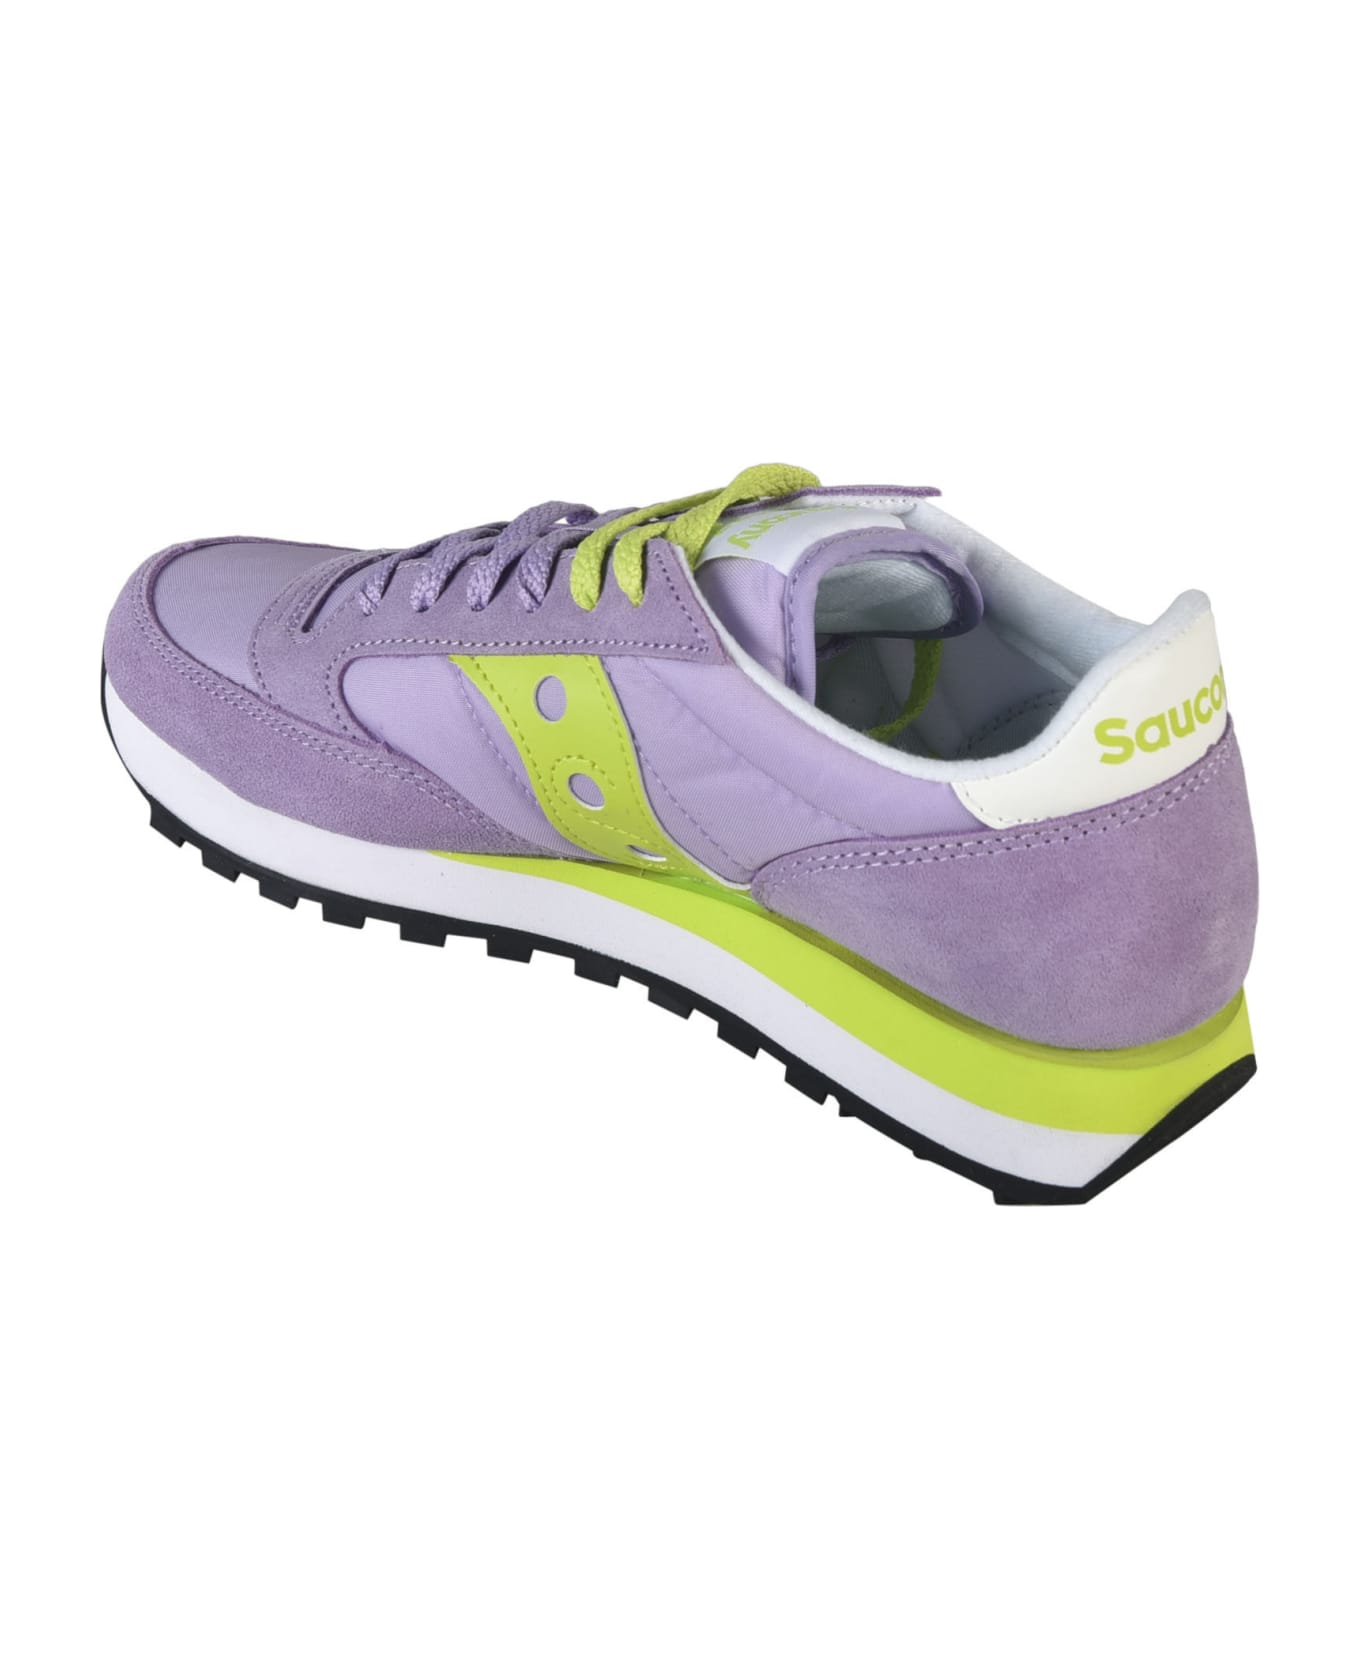 Saucony Jazz Original Sneakers - Purple/Lime